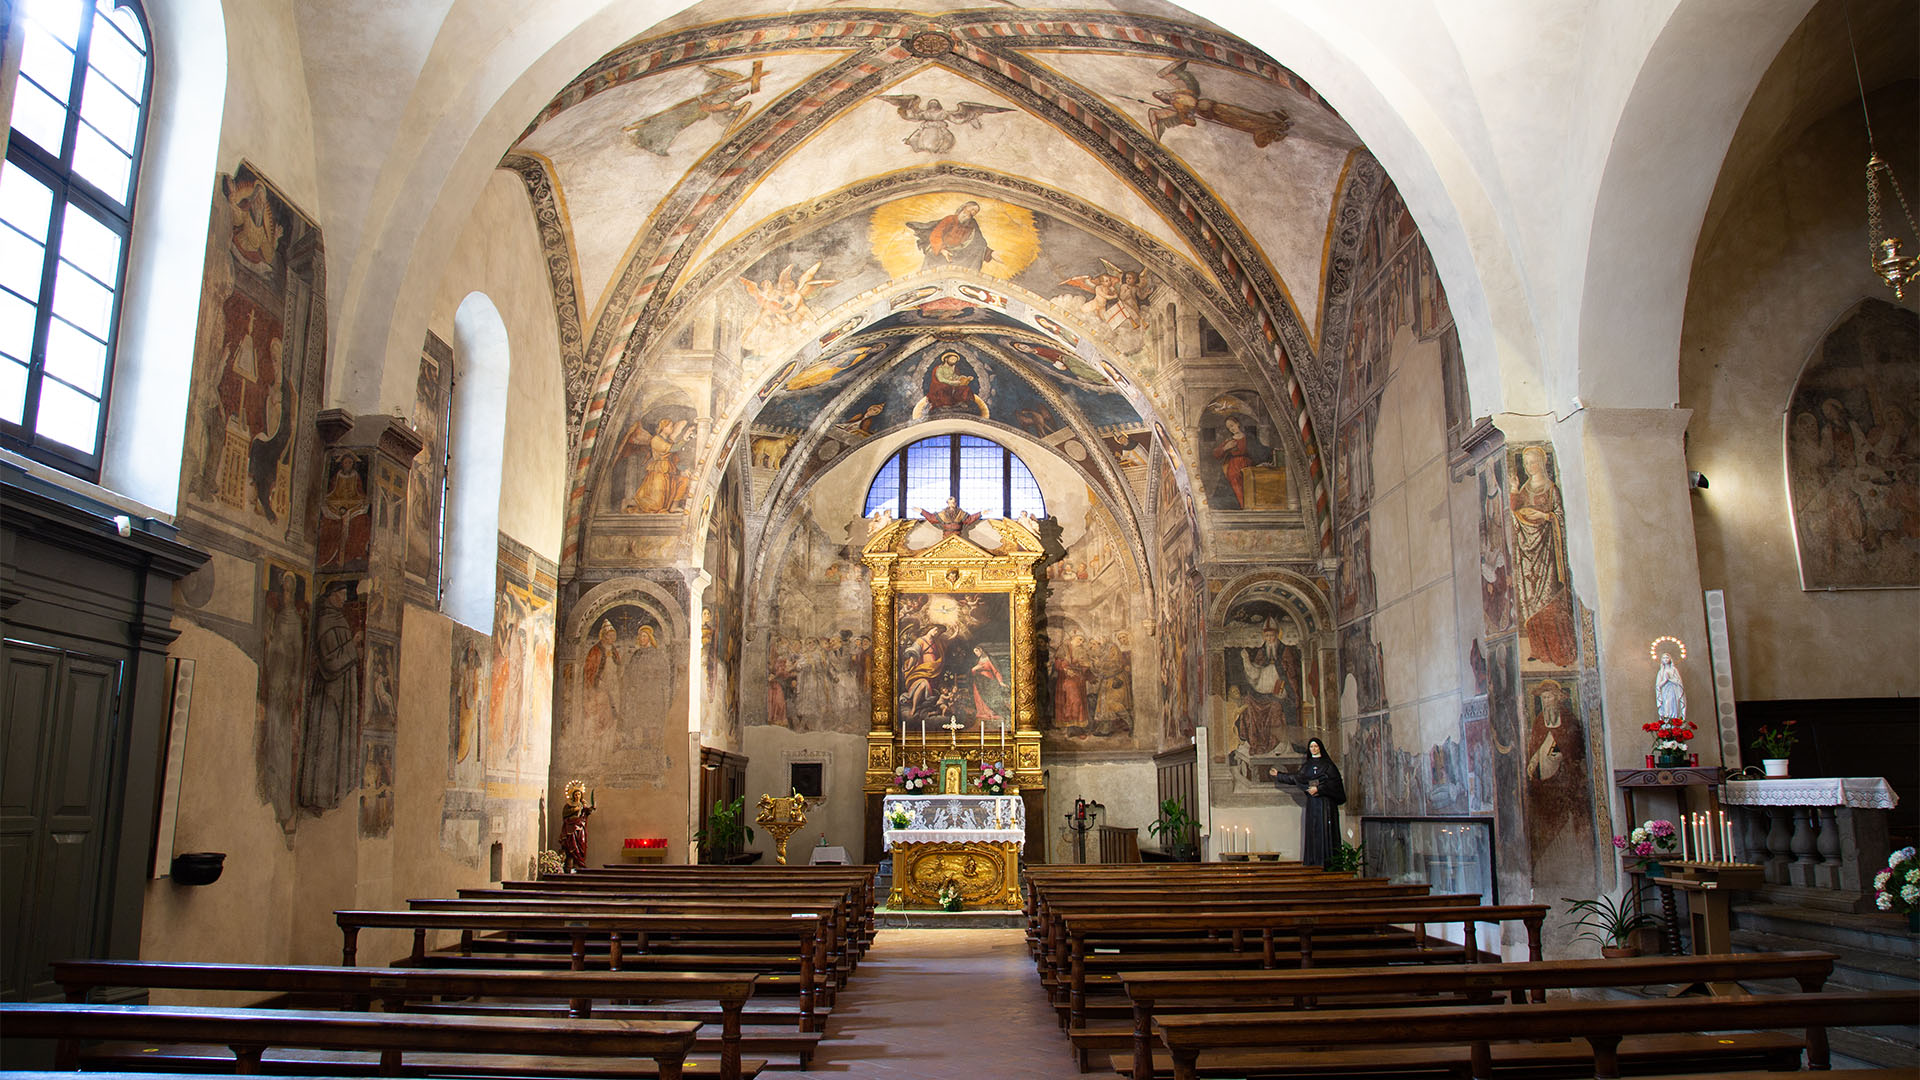 Frescoes in the presbytery of the Church of Santa Maria Annunciata in Bienno